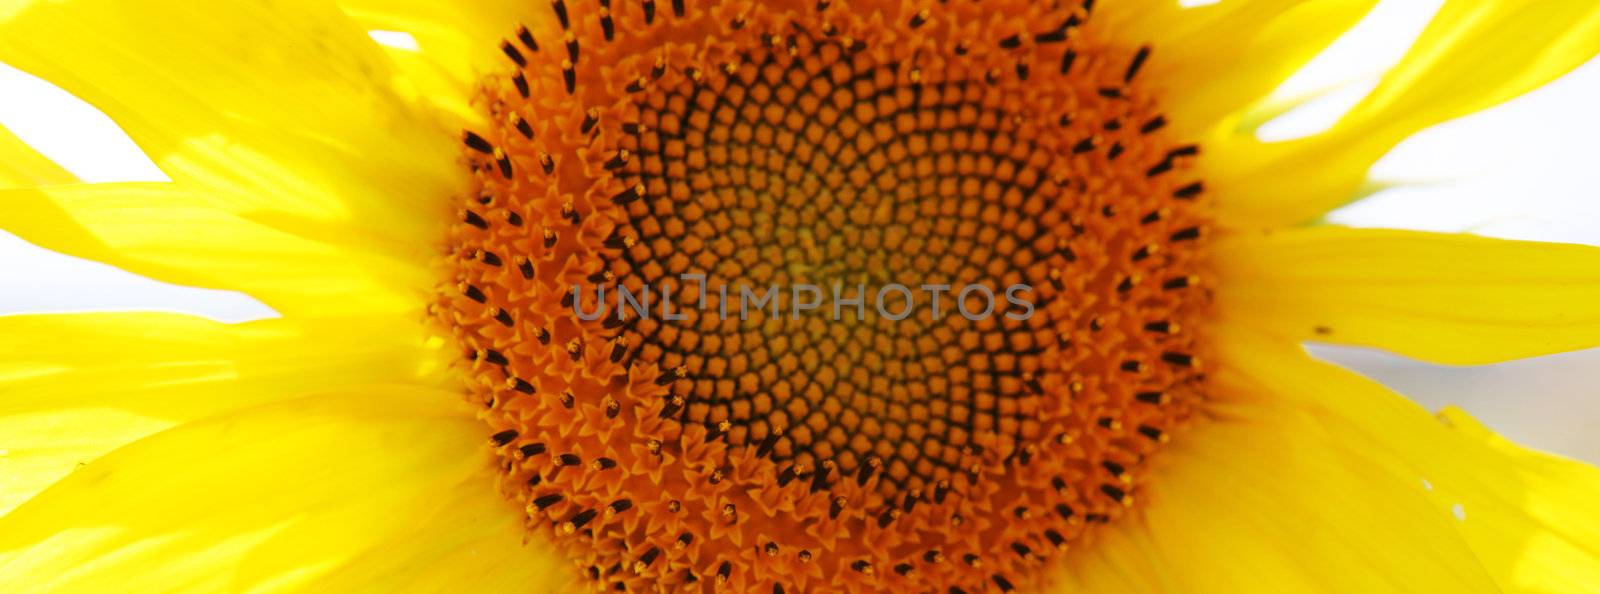 sunflower by nenov